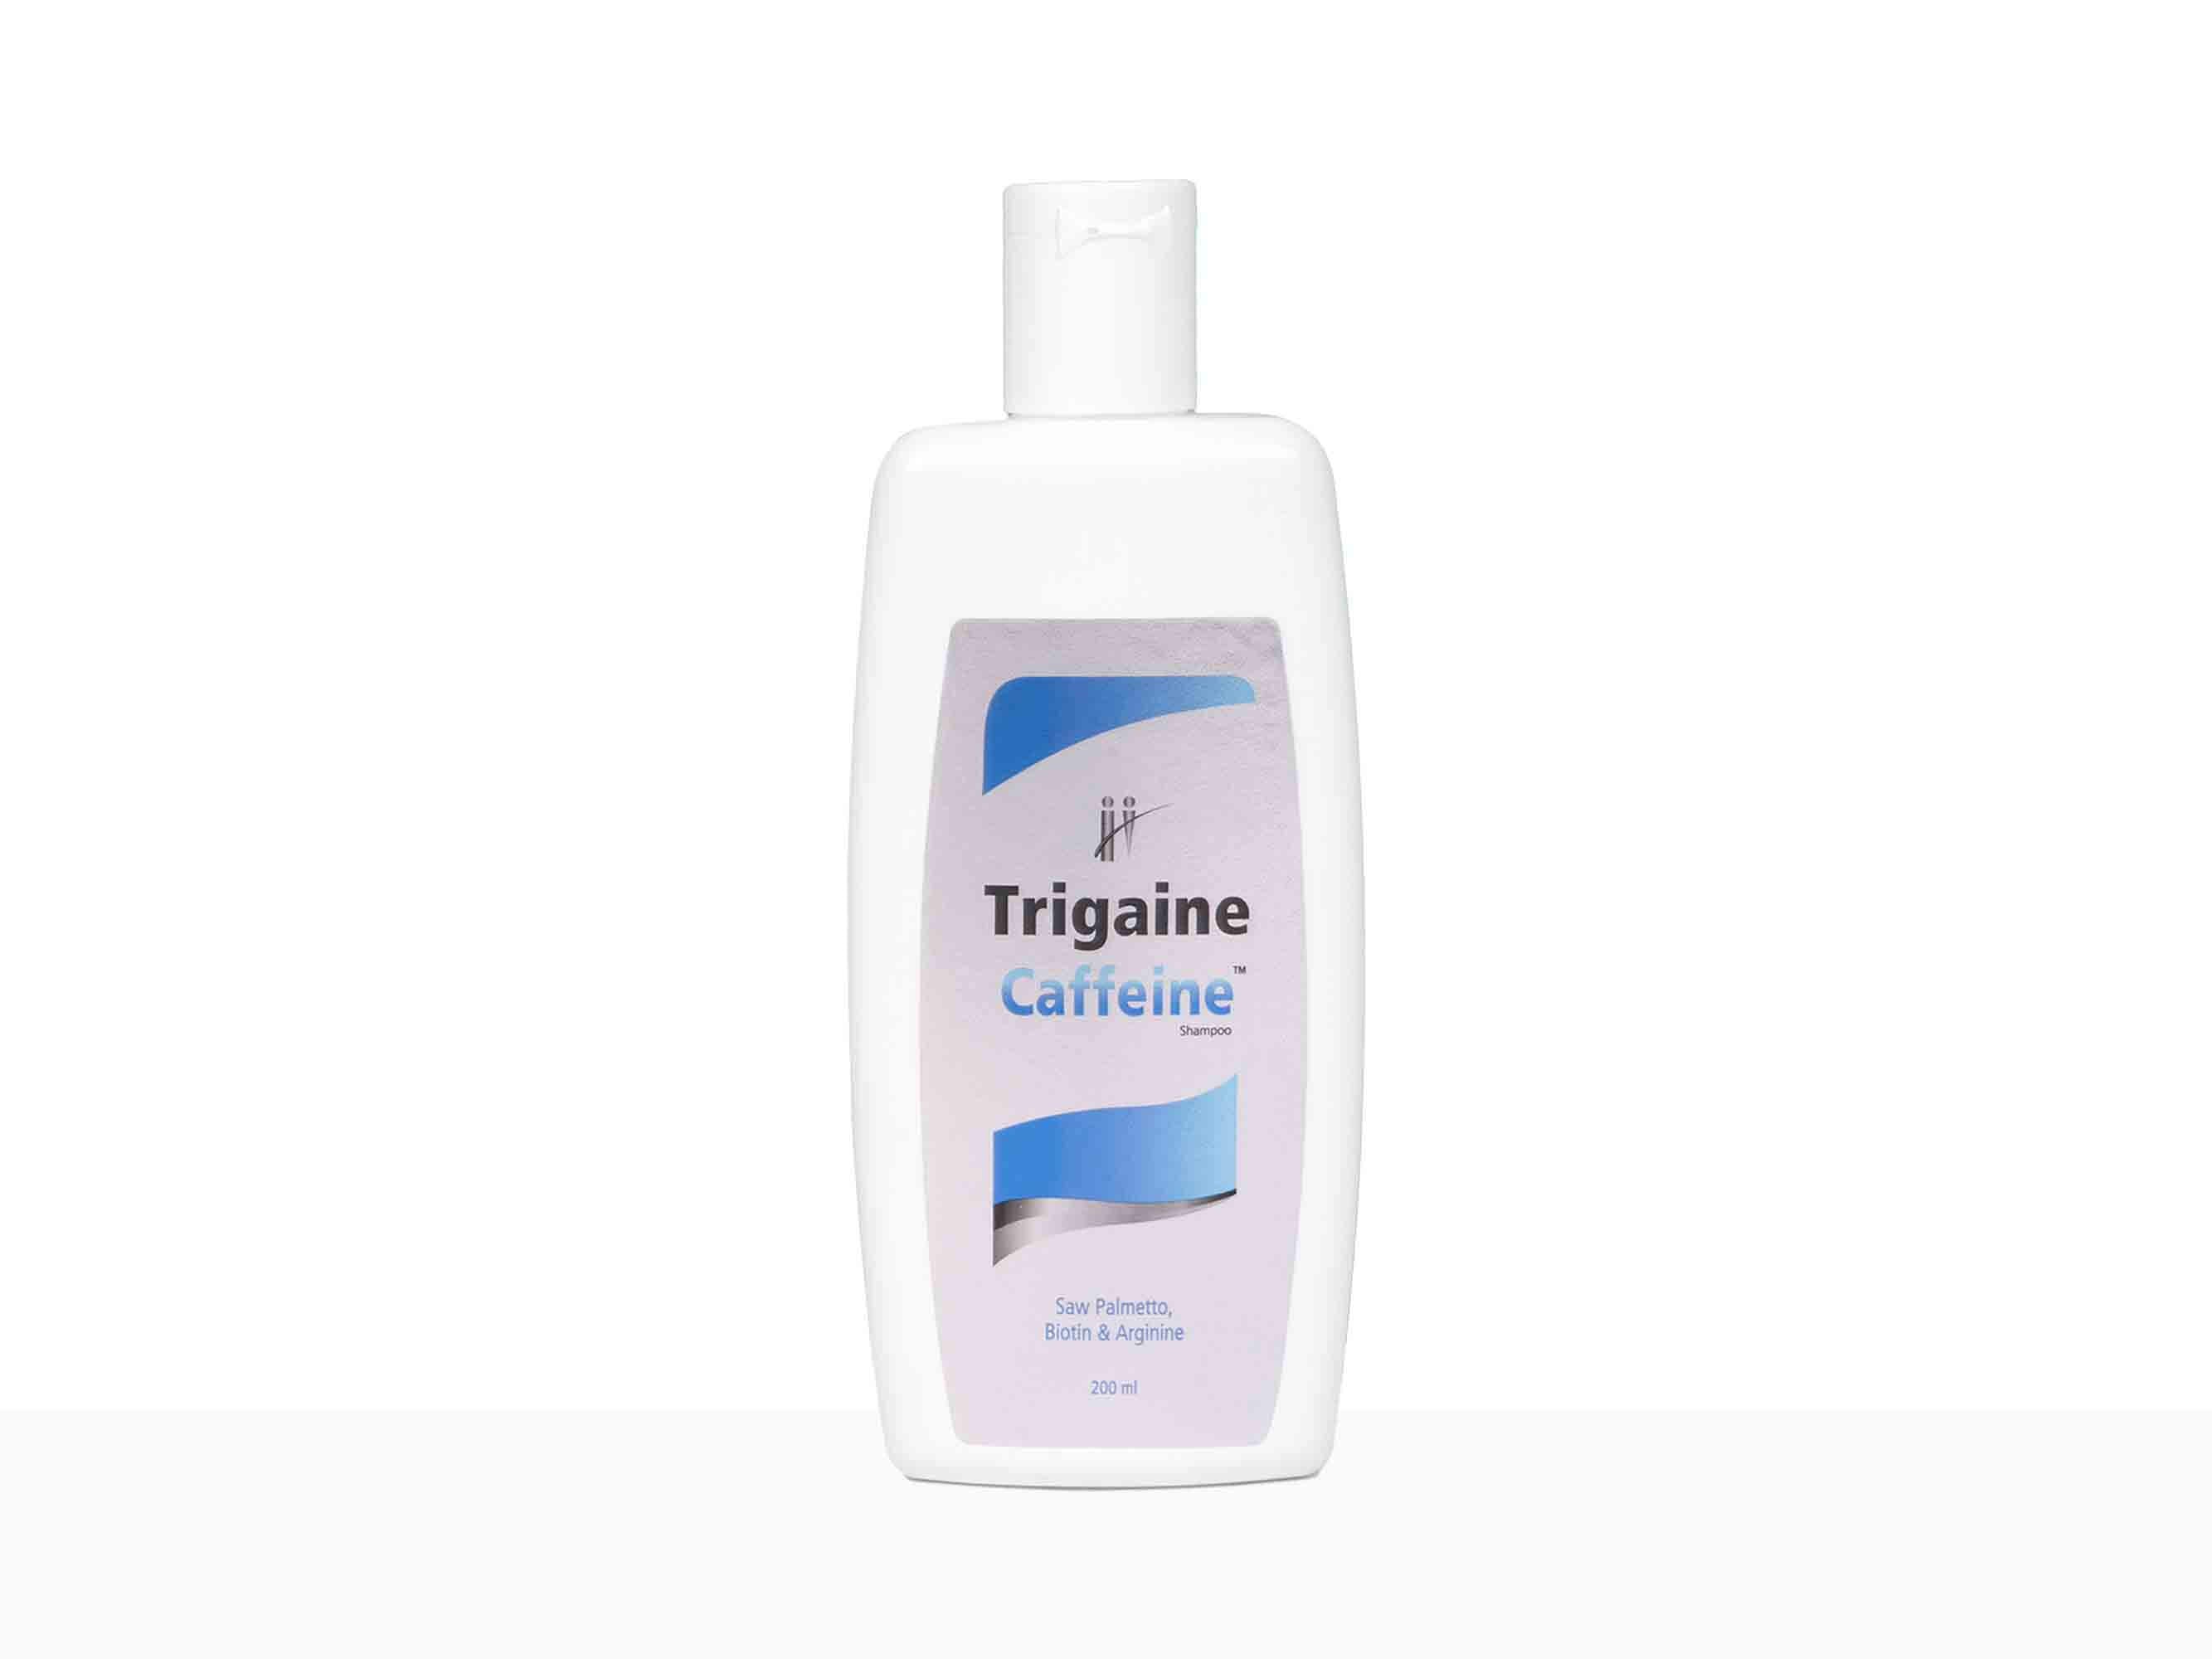 Trigaine caffeine shampoo - Clinikally